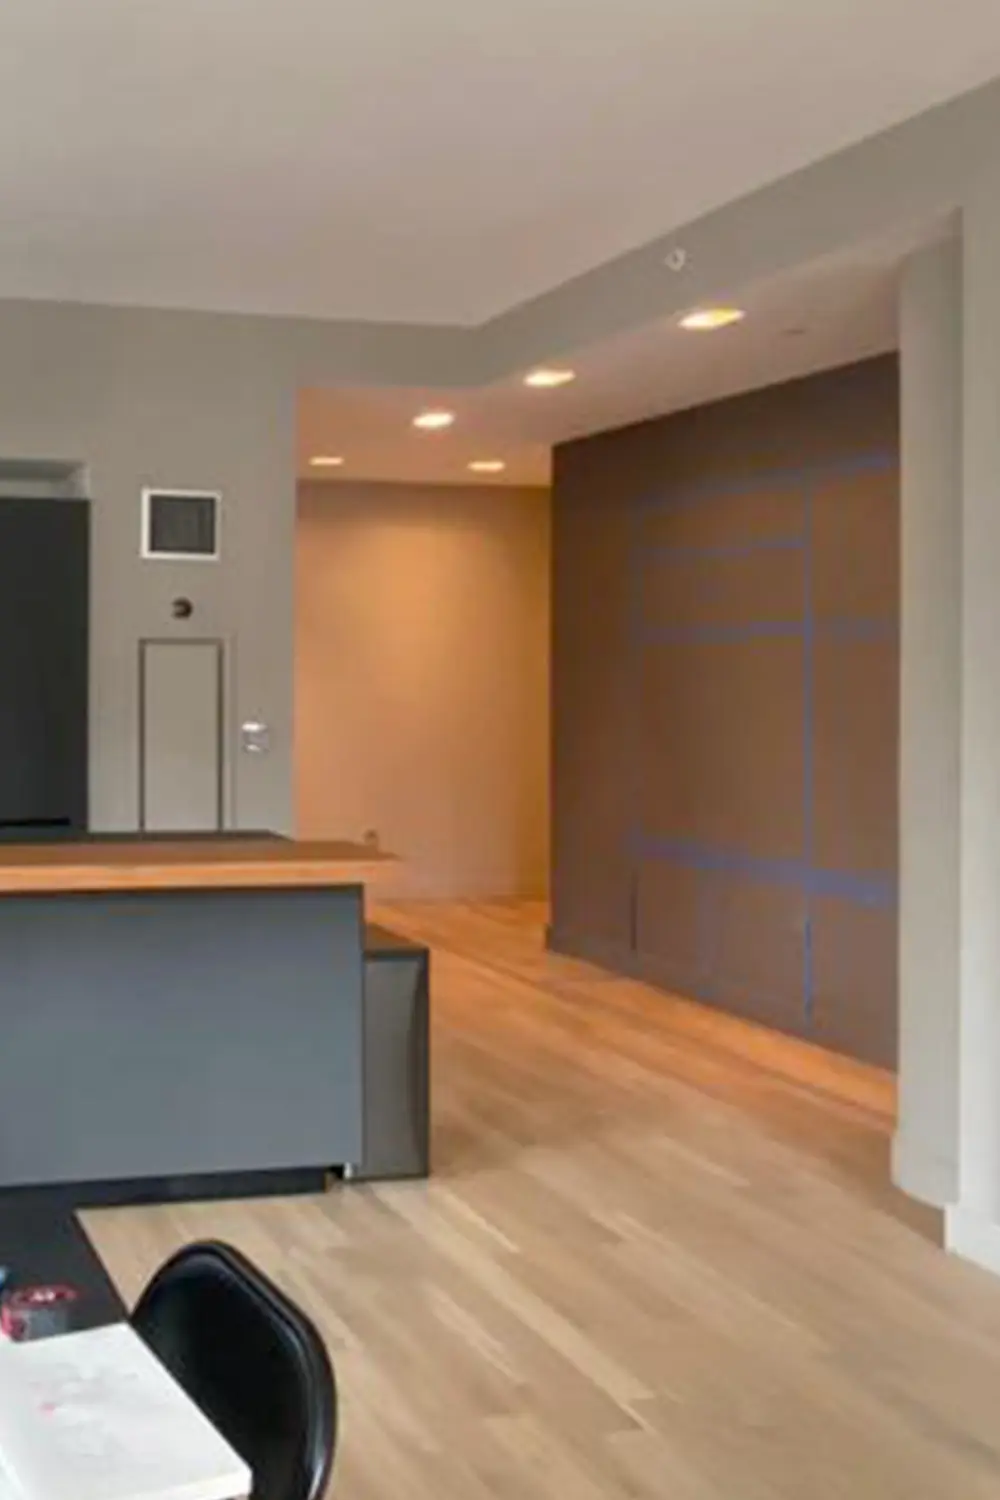 Existing Conditions of Manhattan Apartment before Interior Design Services